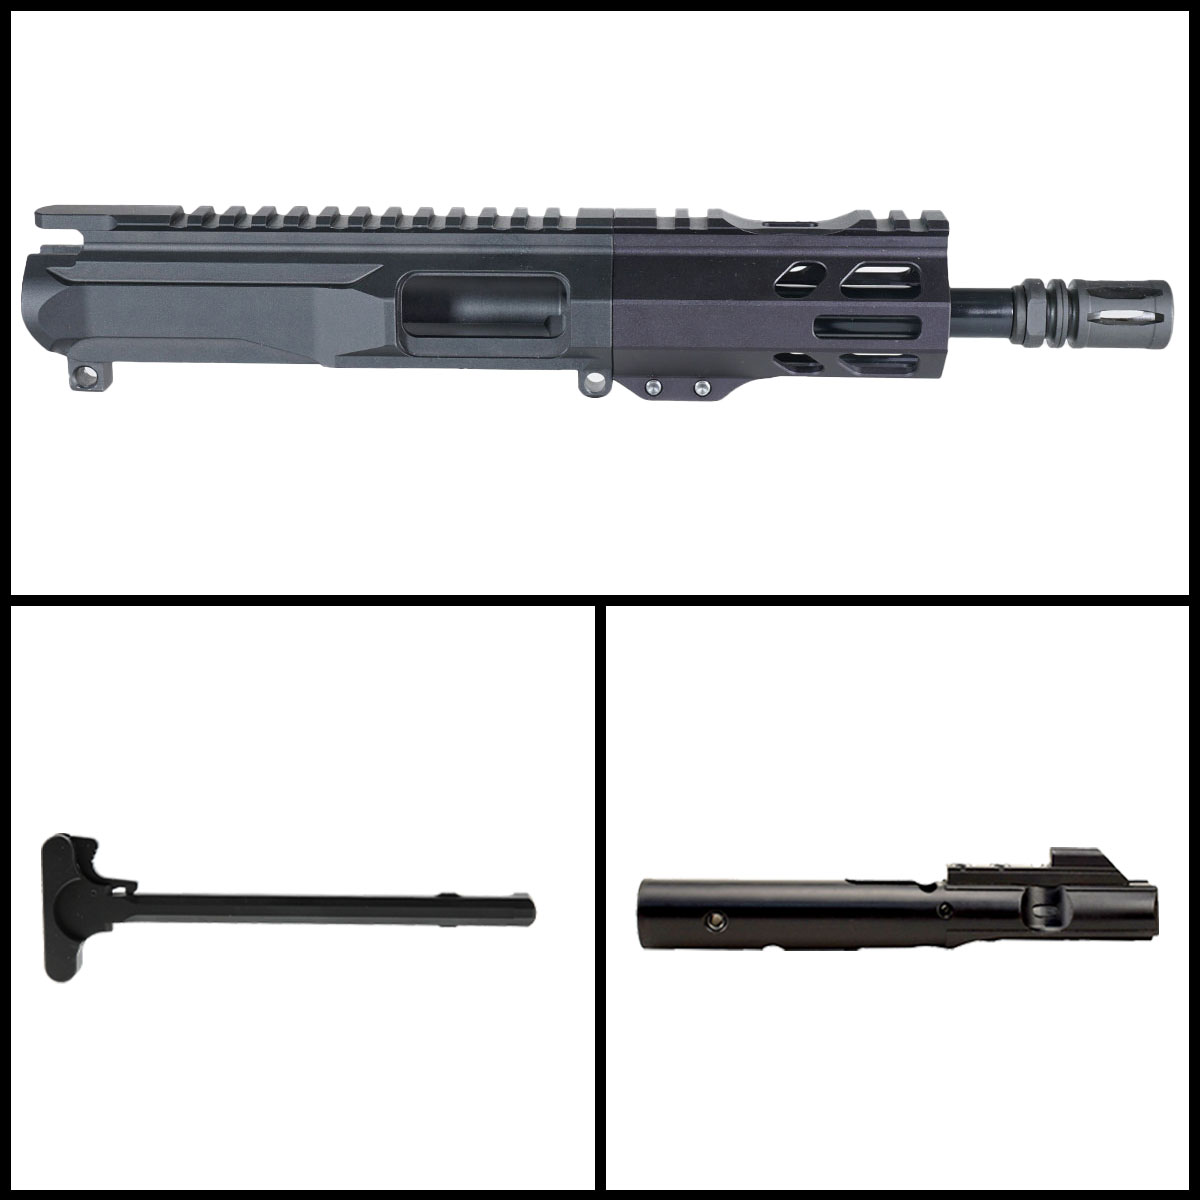 DTT 'H.V.T Gen 1' 6-inch AR-15 9mm Nitride Pistol Complete Upper Build Kit